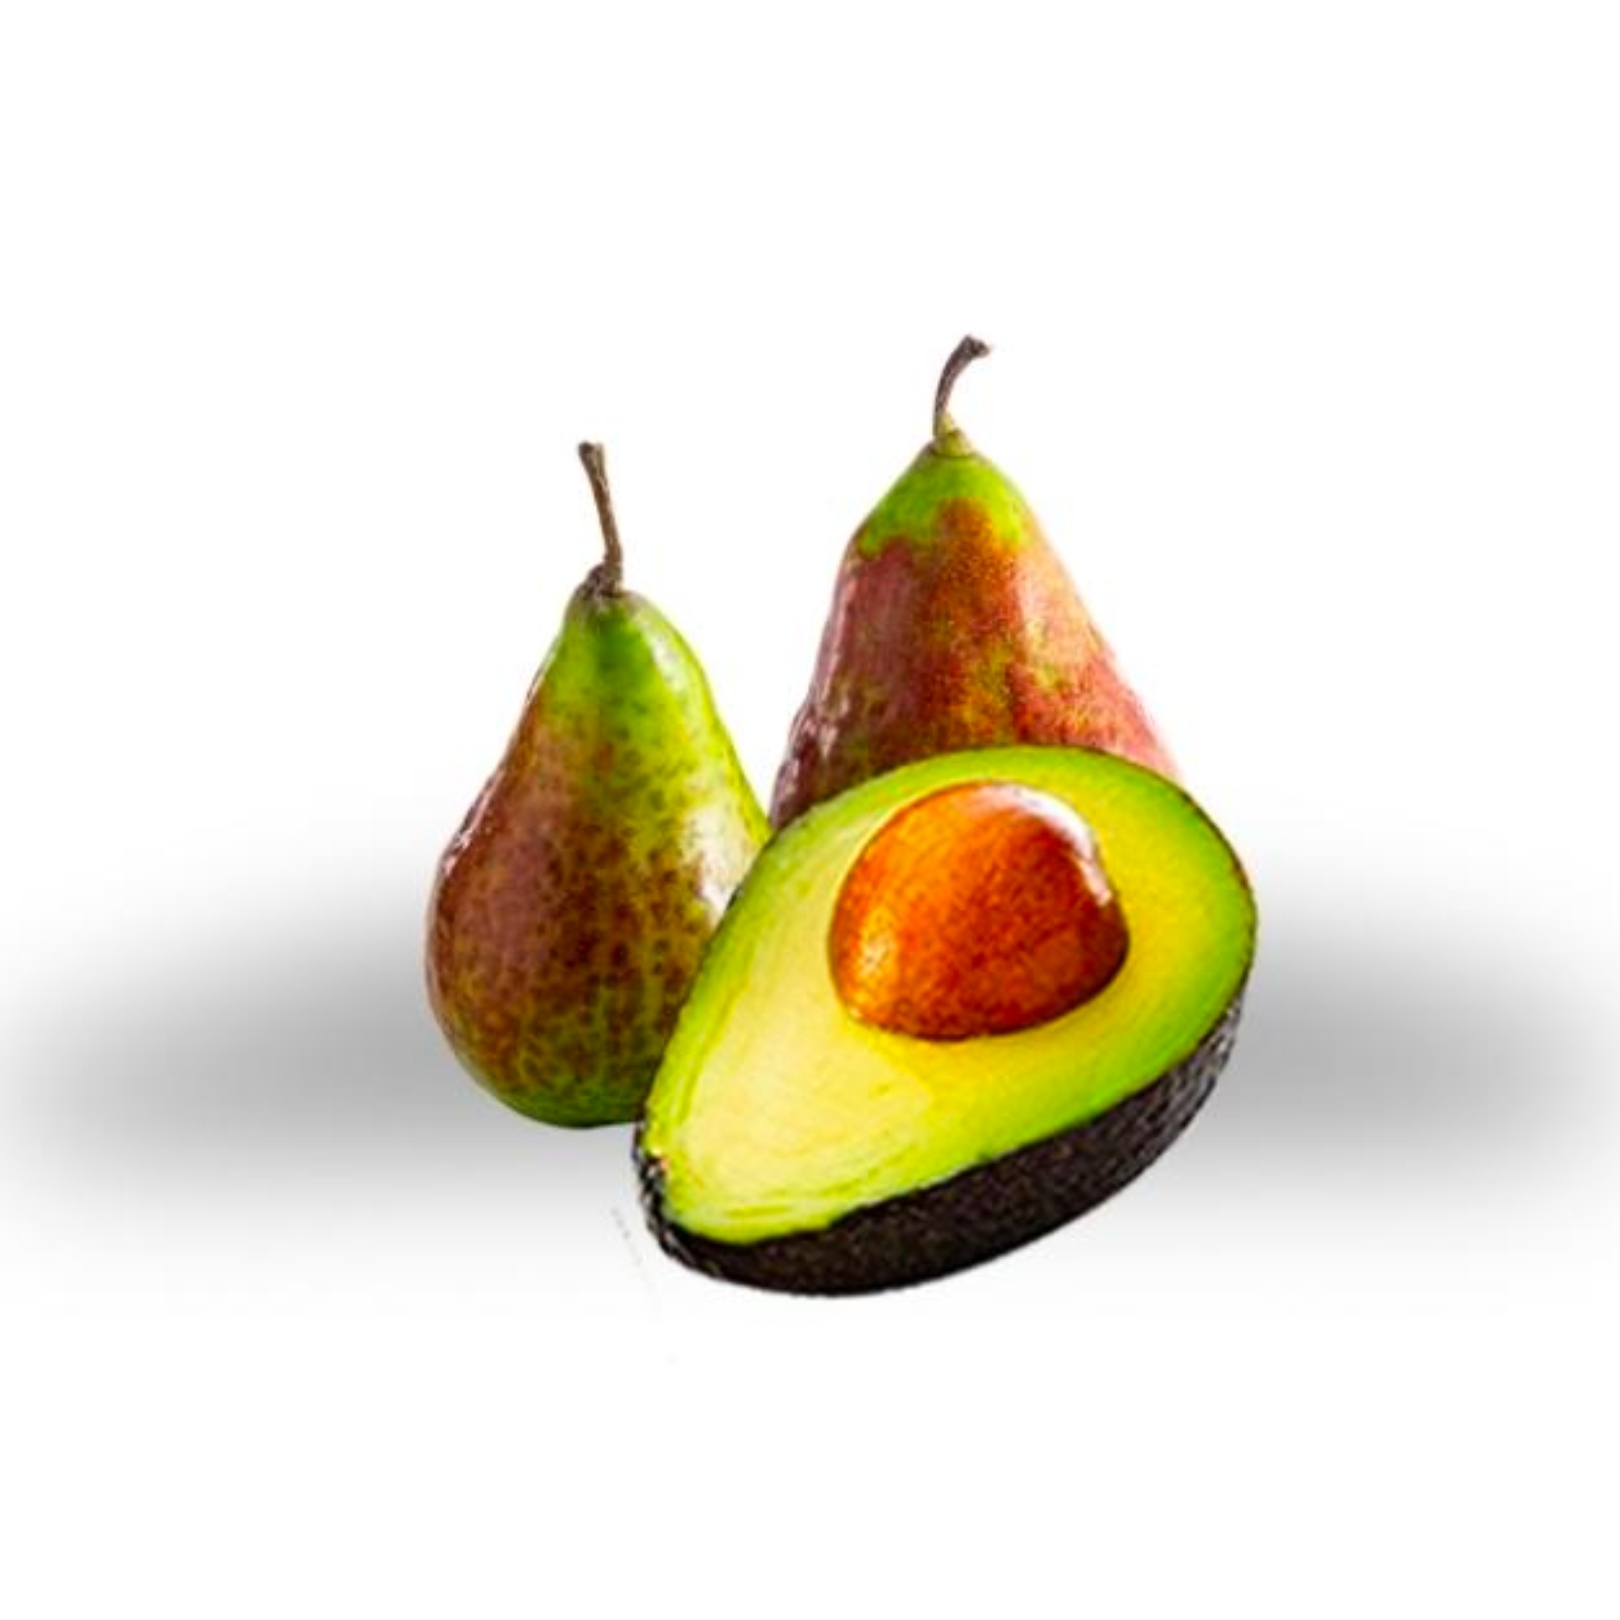 Buy Pear Avocado Online NZ